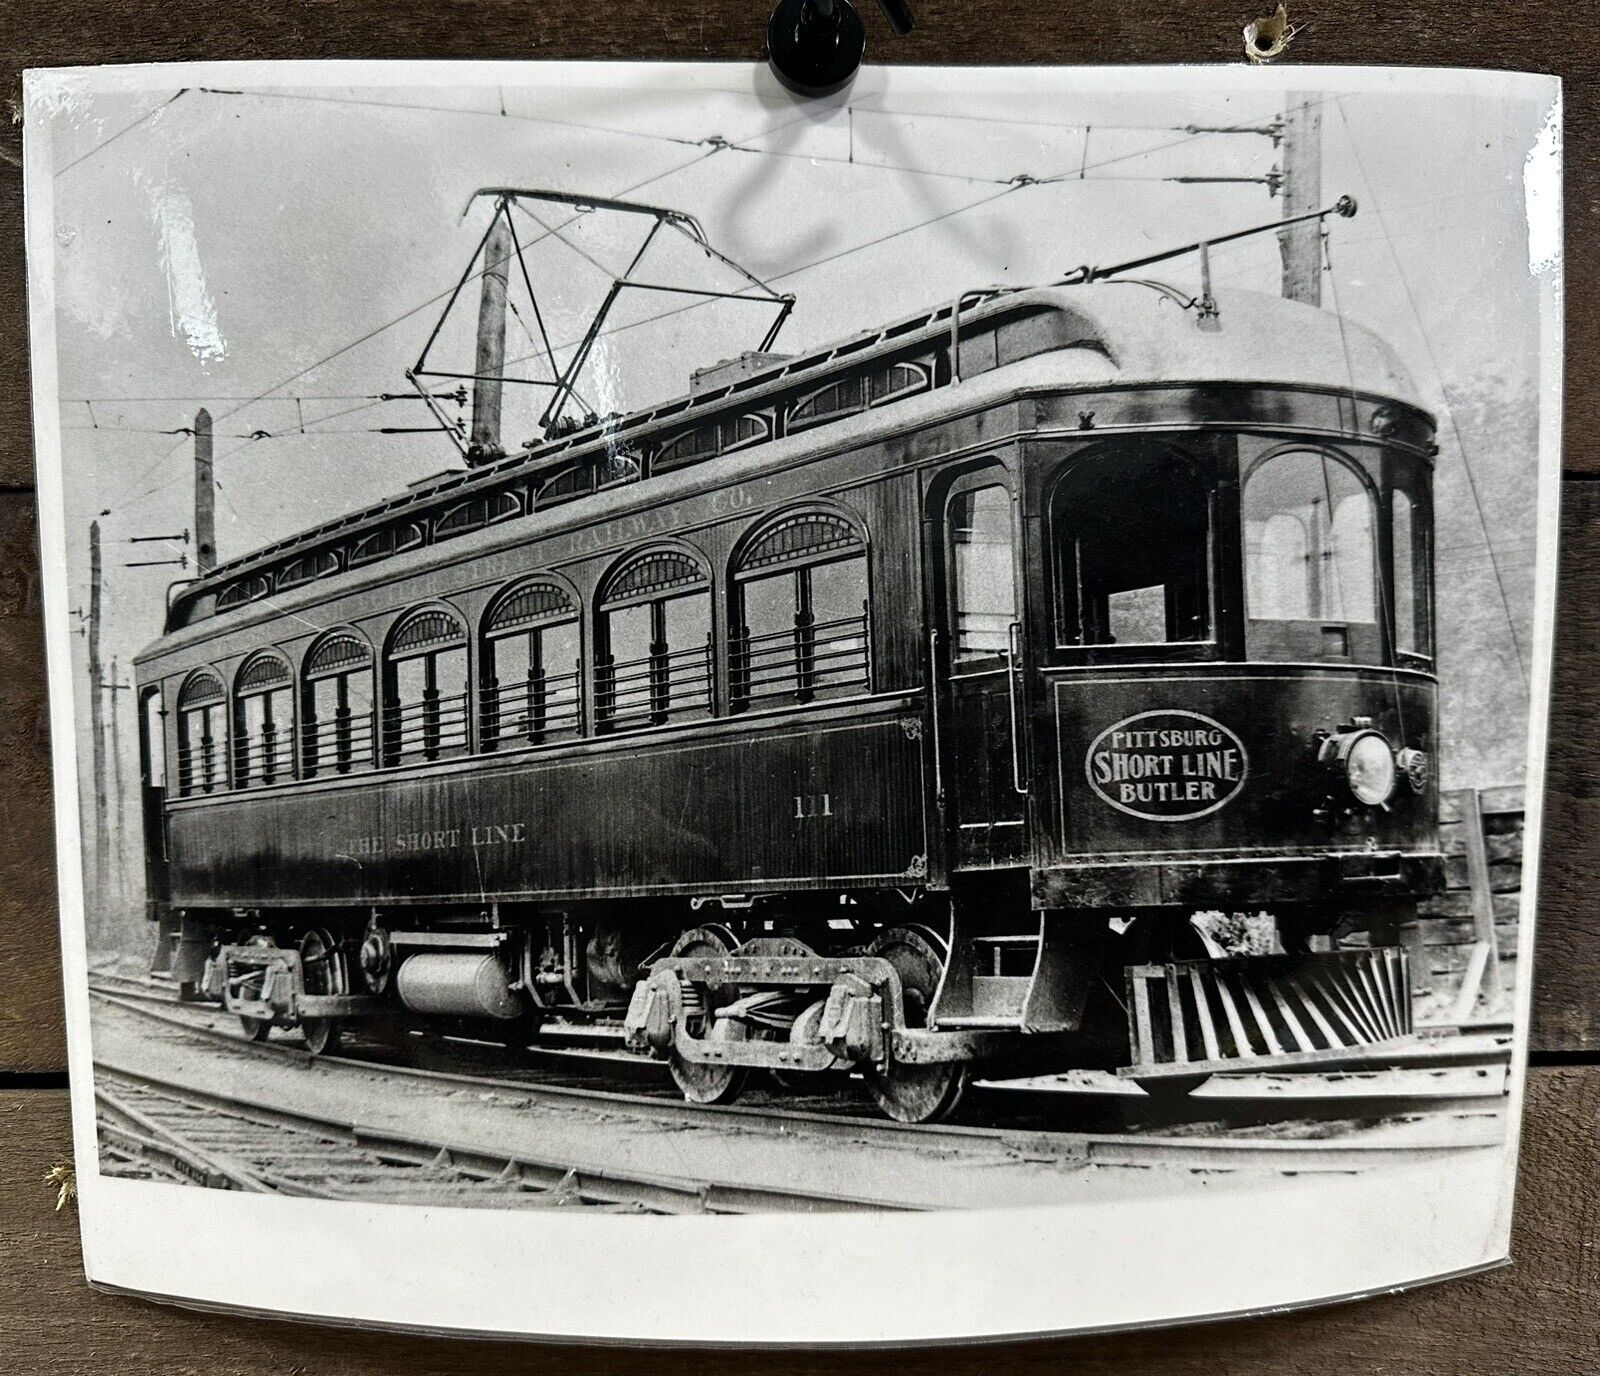 Vintage “Pittsburg Short Line Butler” Trolley Photo 